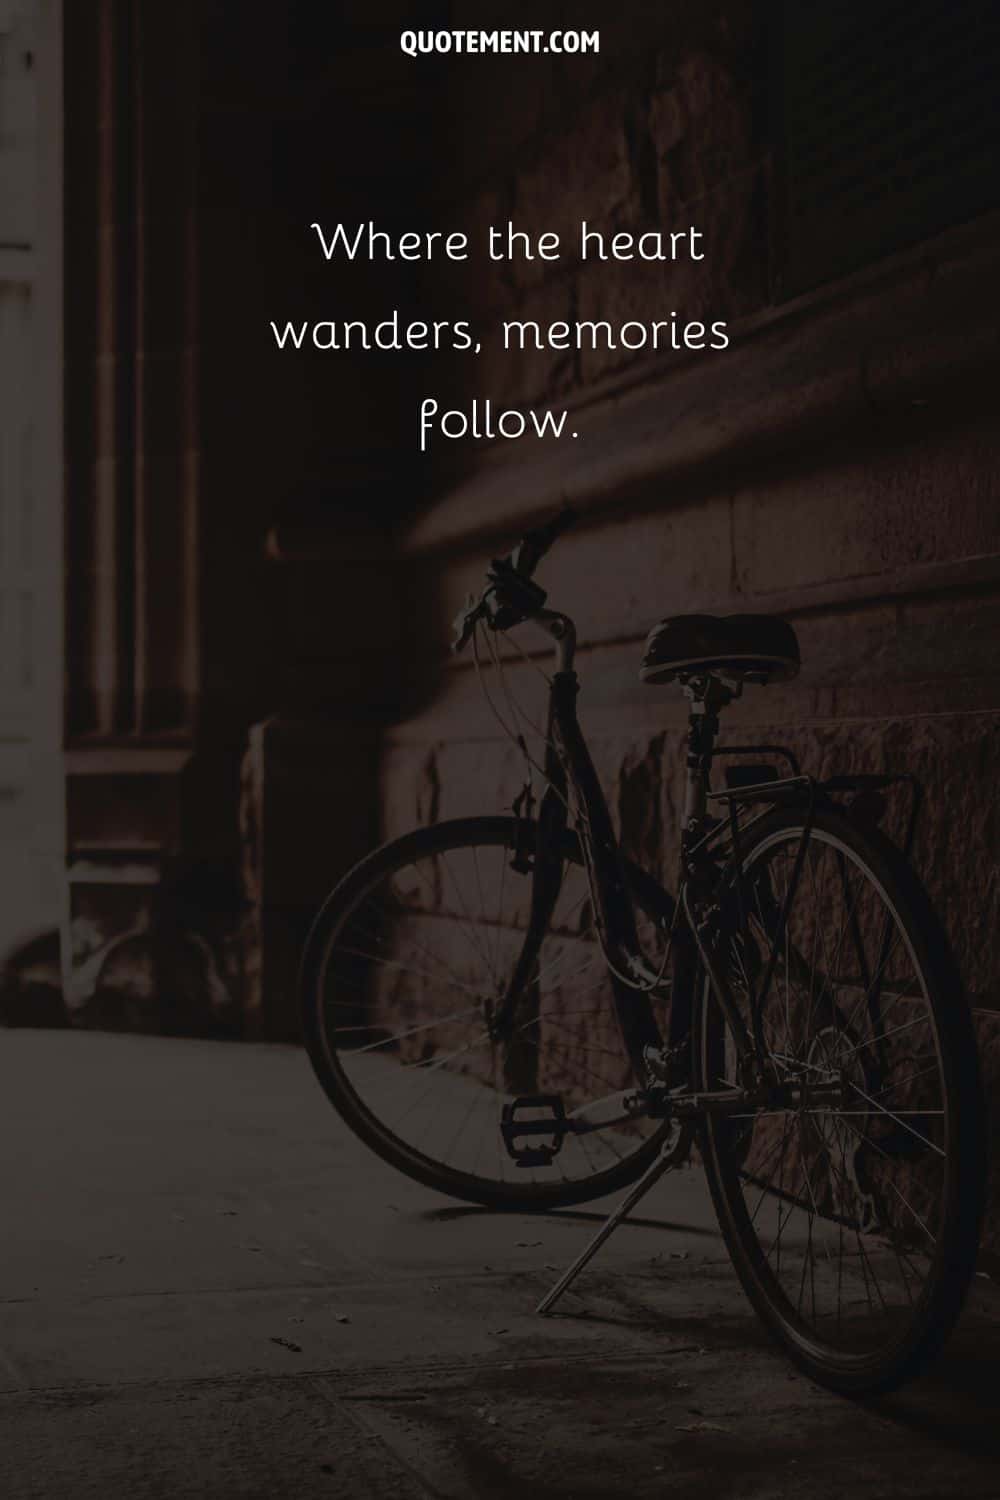 Where the heart wanders, memories follow.
